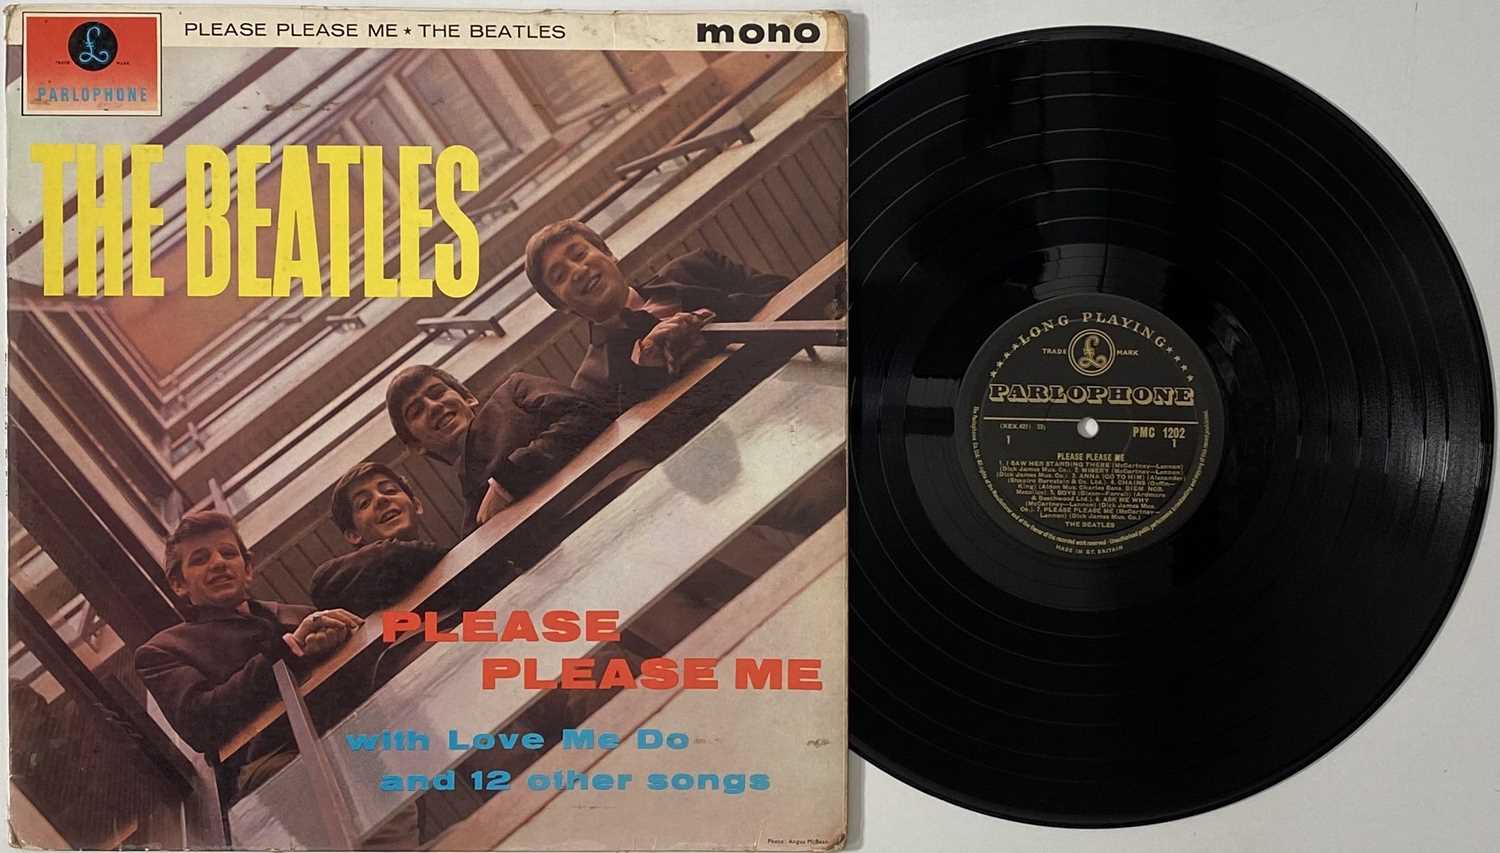 THE BEATLES - PLEASE PLEASE ME LP (ORIGINAL UK MONO 'BLACK AND GOLD' PRESSING - PMC 1202).